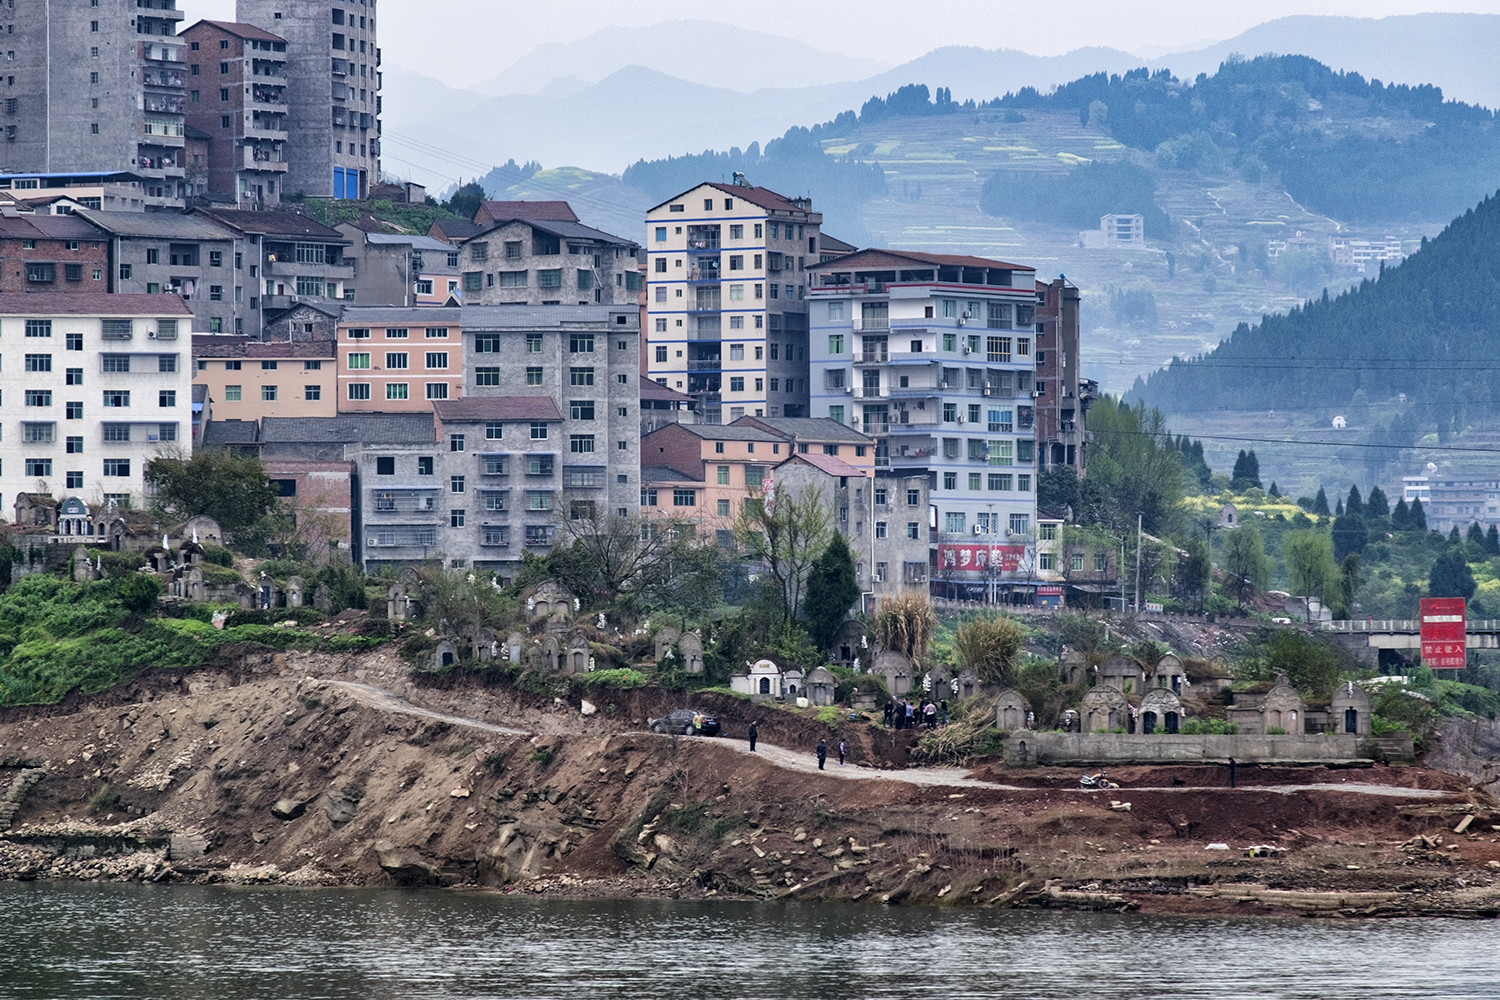 Yangtze River Town